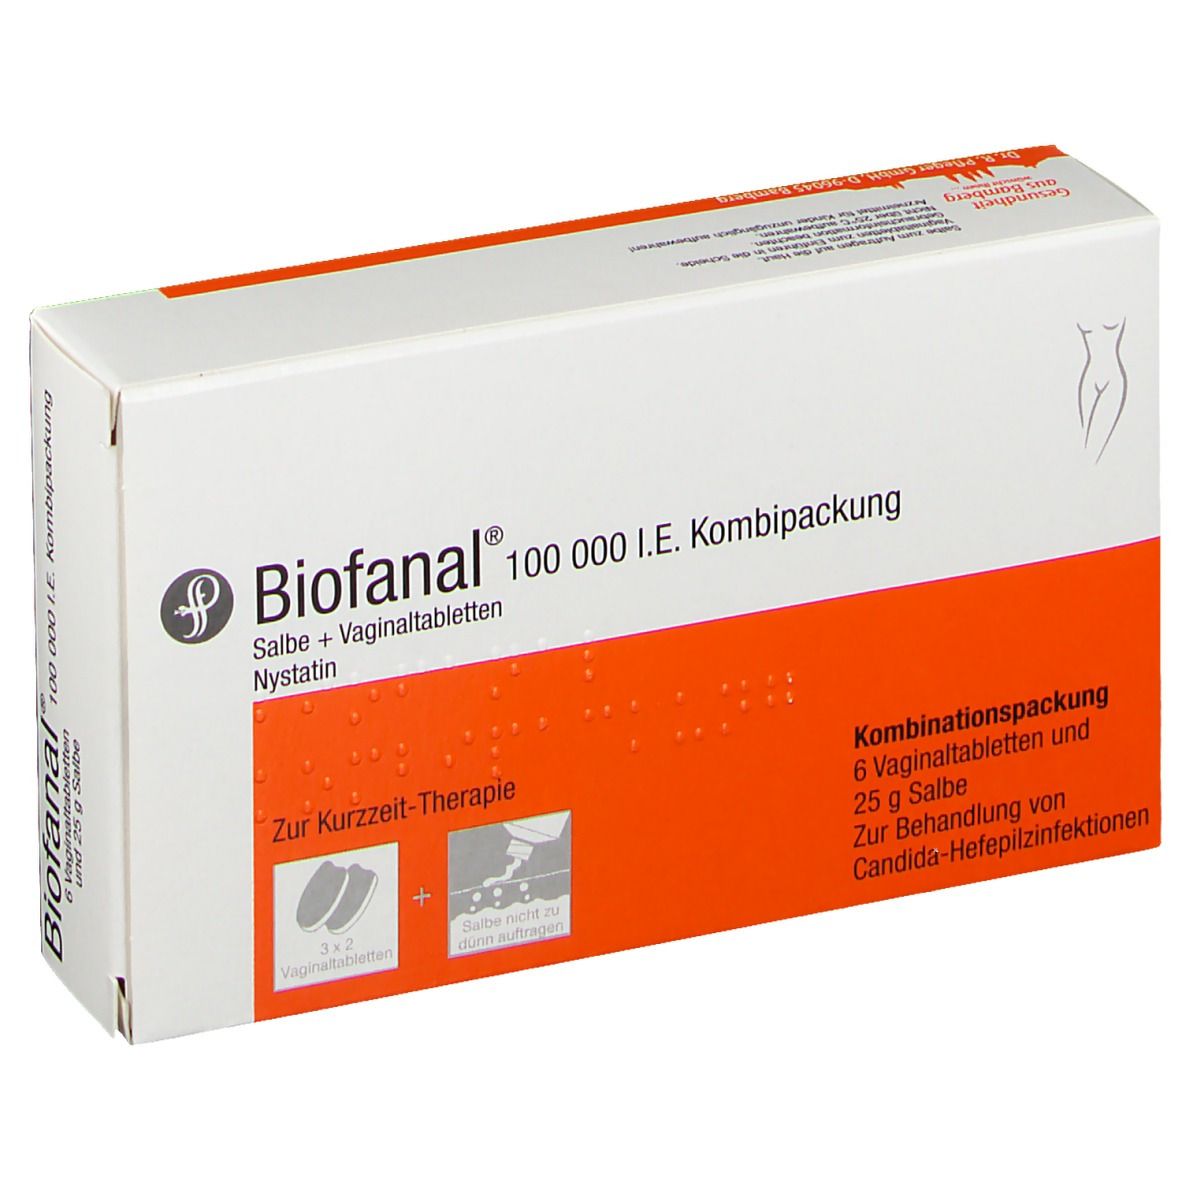 Biofanal® Kombipackung 25g Salbe + 6 Vaginaltabletten